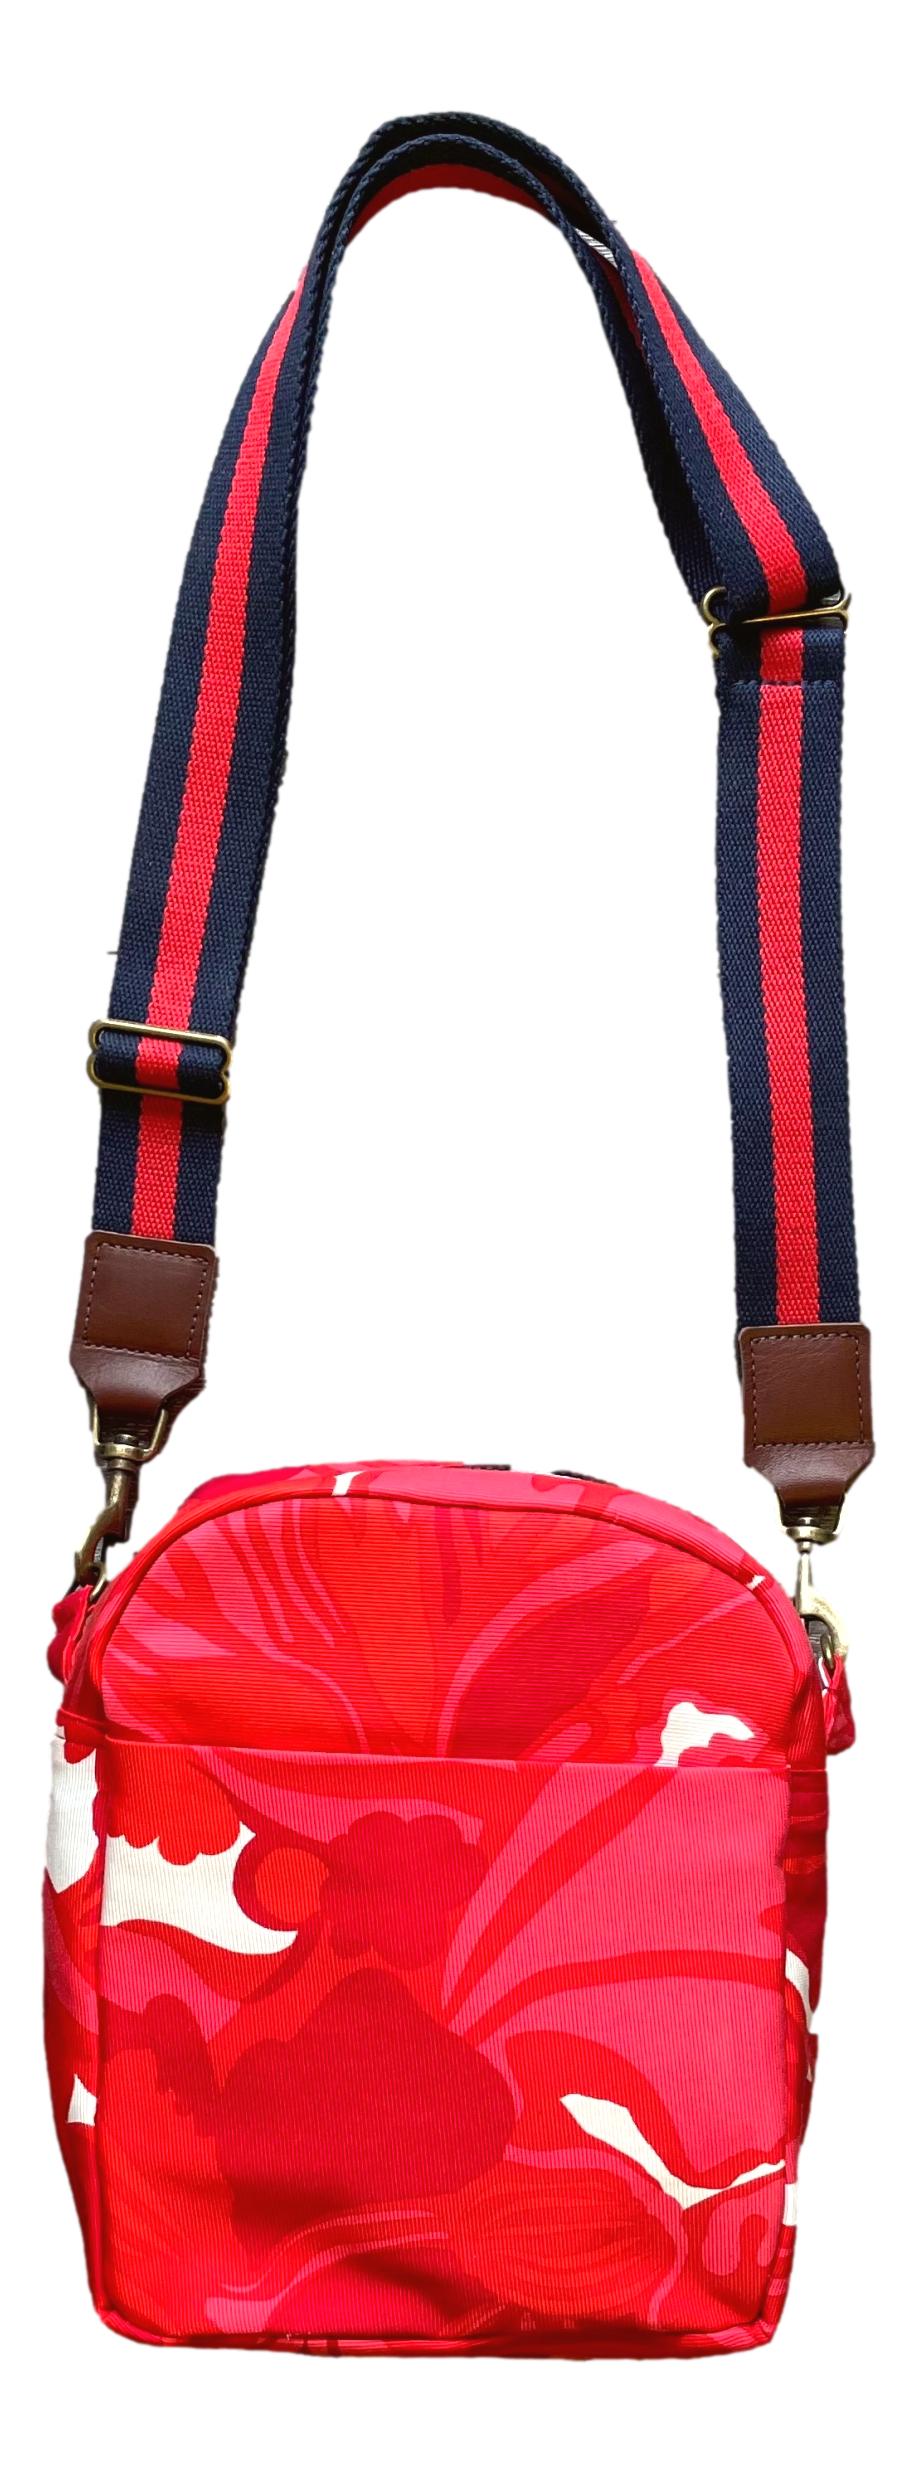 Valentina Italy Brown leather handbag(s)